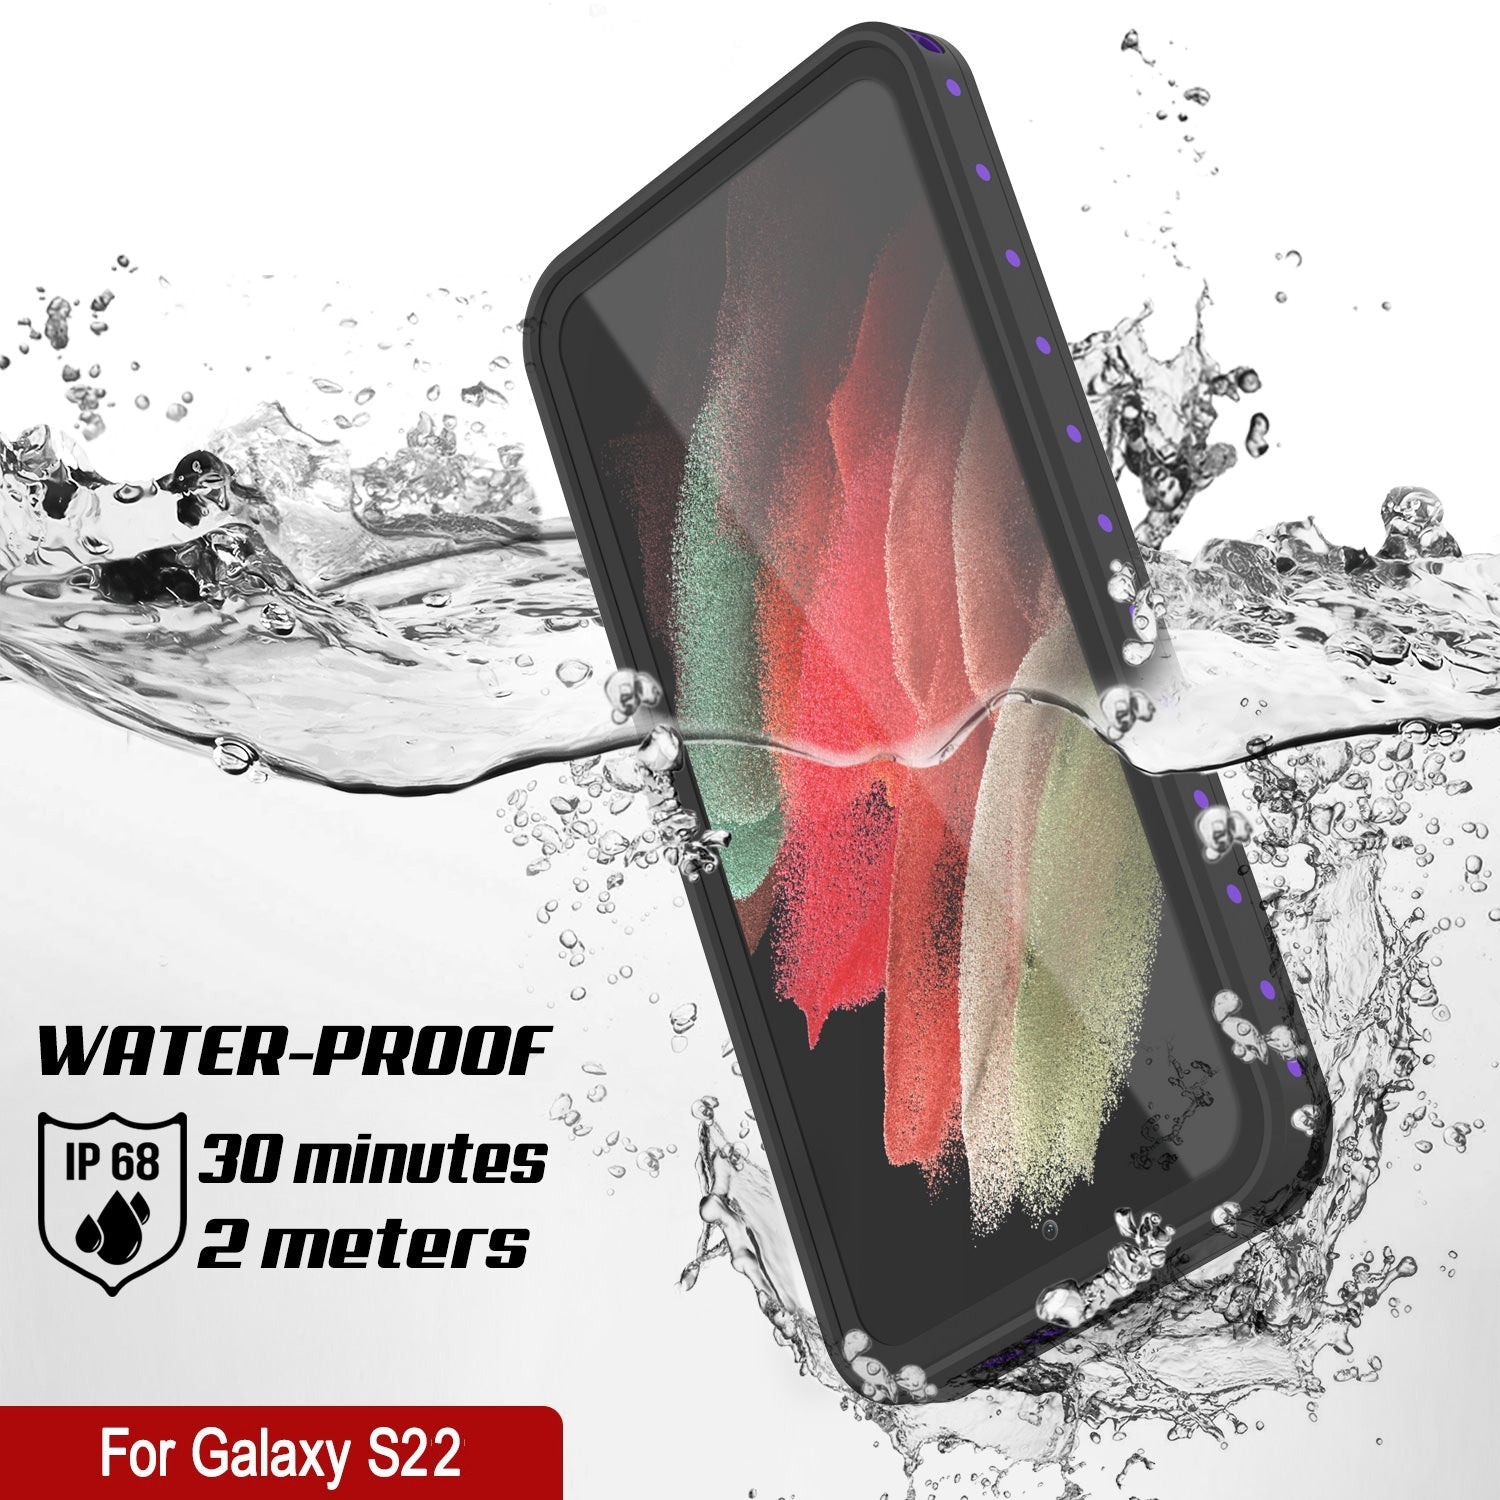 Galaxy S22 Waterproof Case PunkCase StudStar Purple Thin 6.6ft Underwater IP68 Shock/Snow Proof